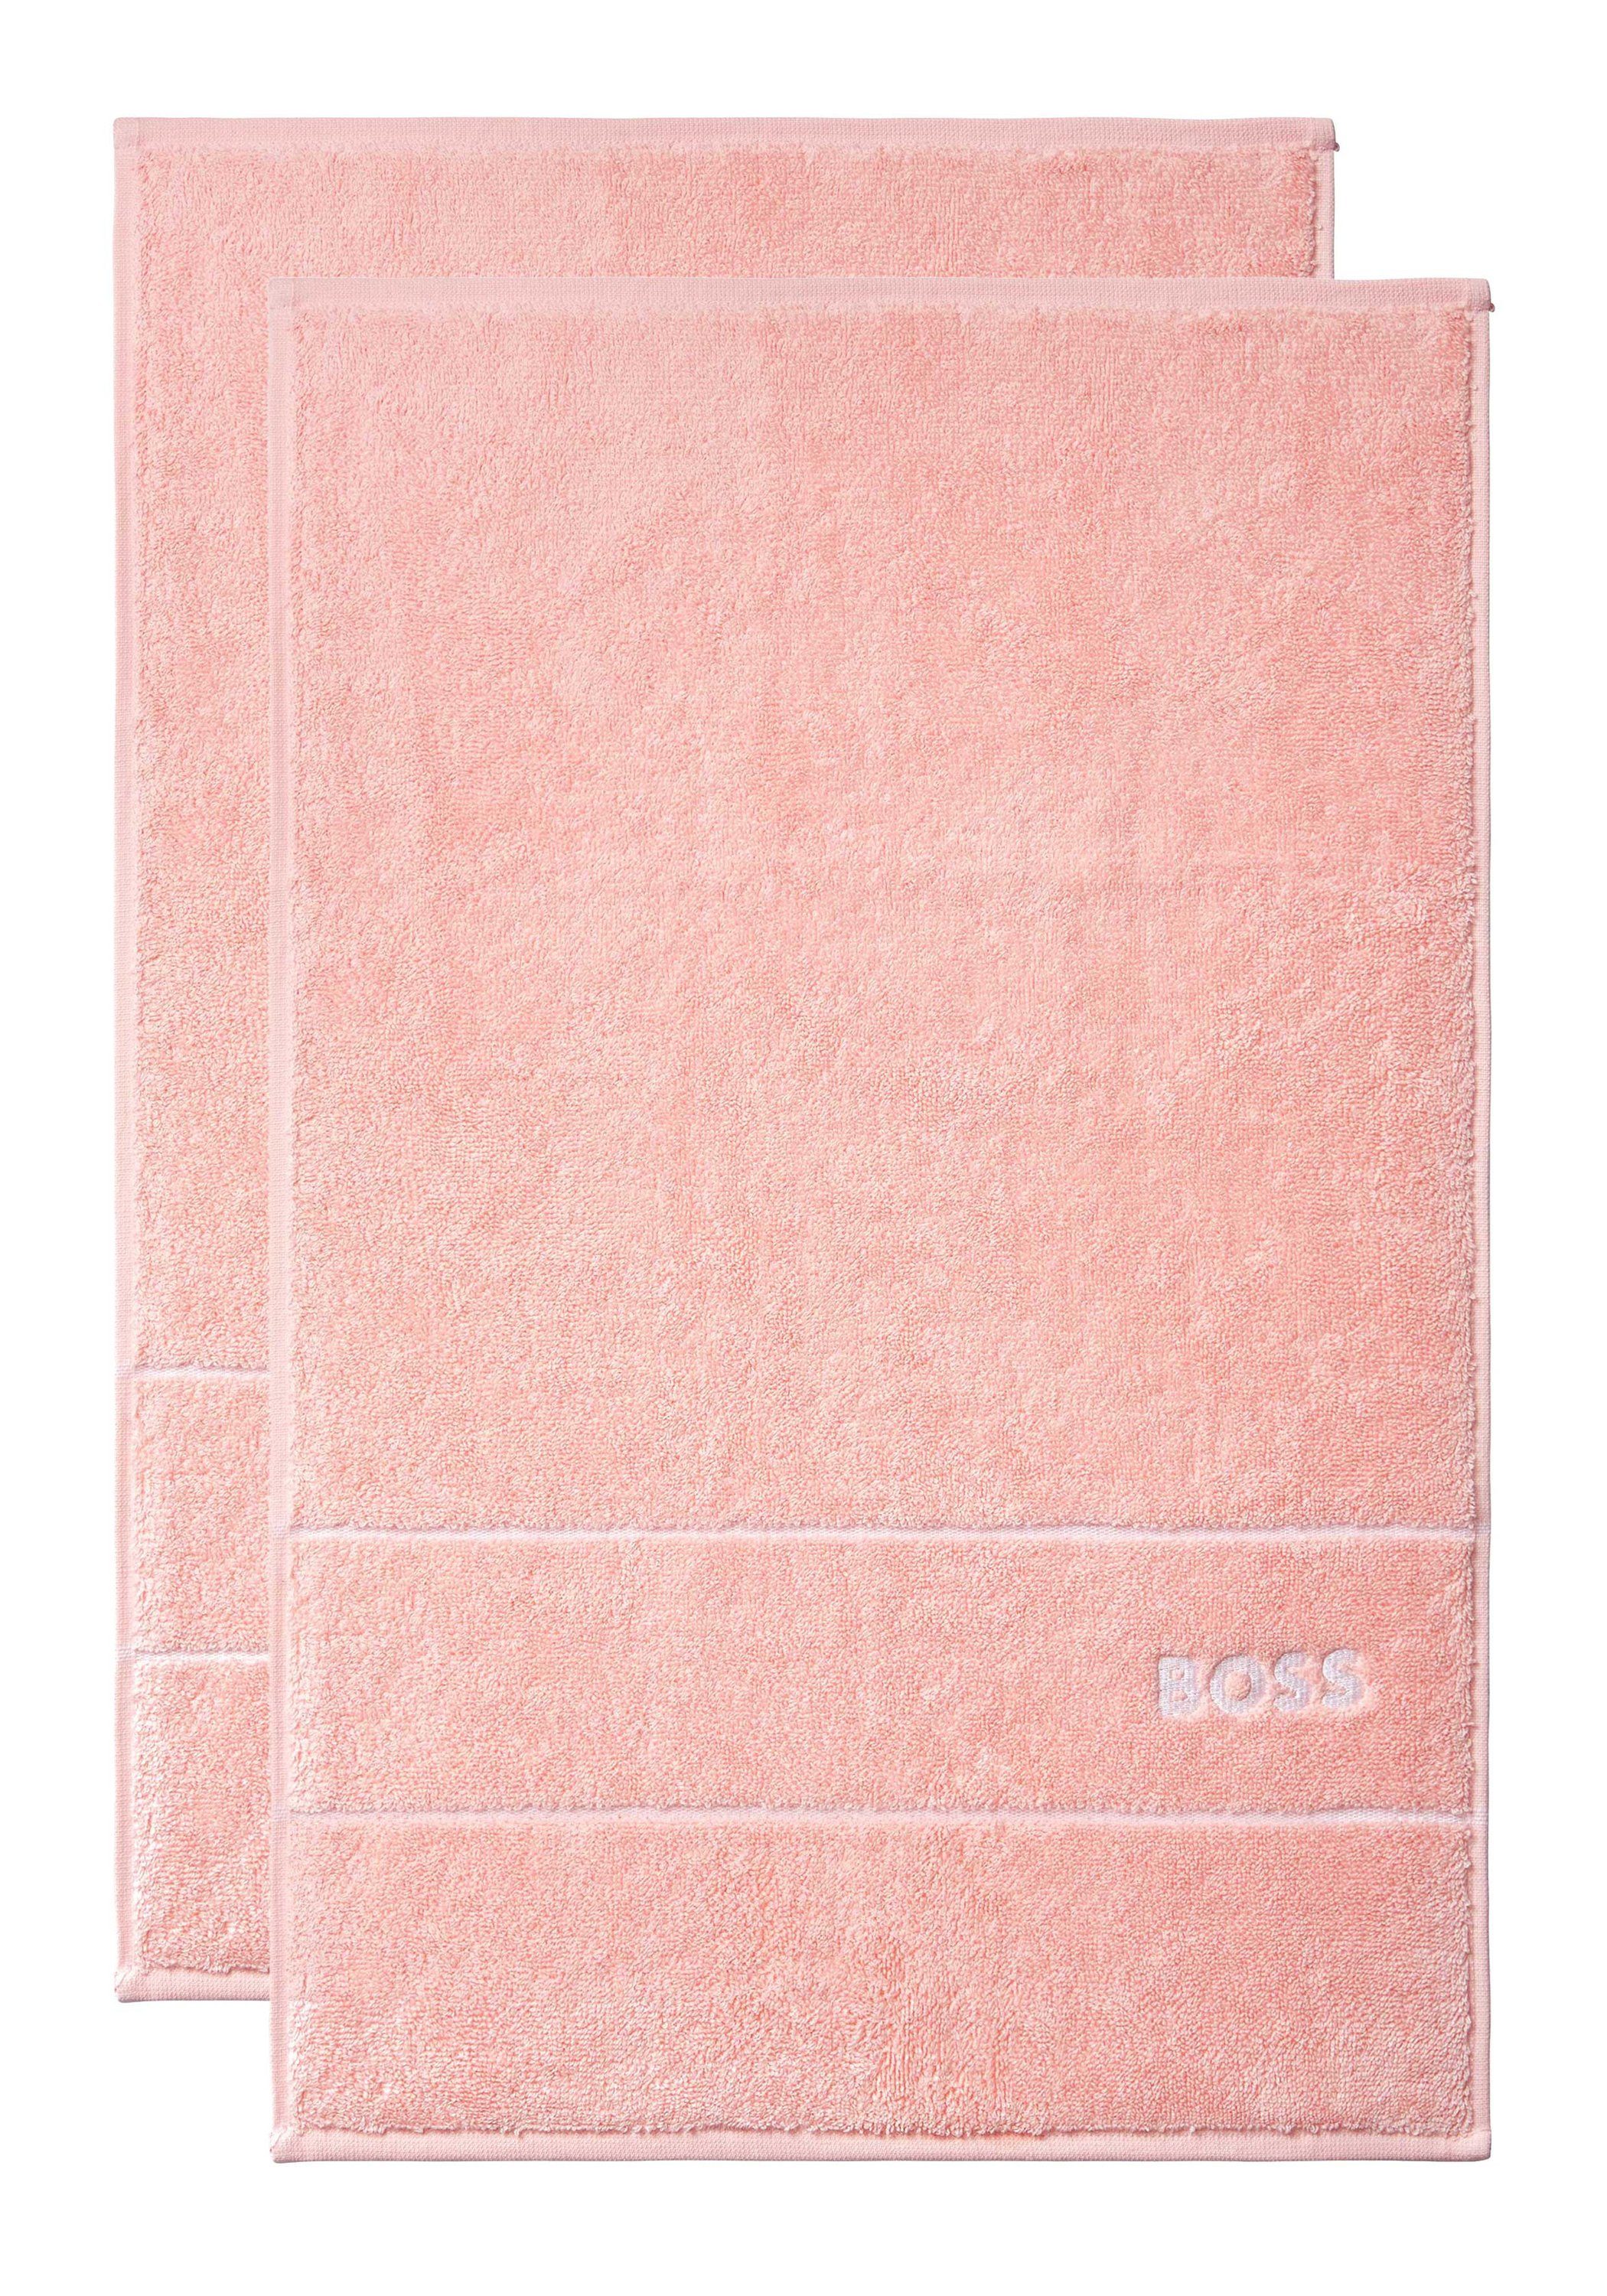 Hugo Boss Home Gästehandtücher PLAIN PRIMRON mit 100% (2tlg), modernem Baumwolle, Design